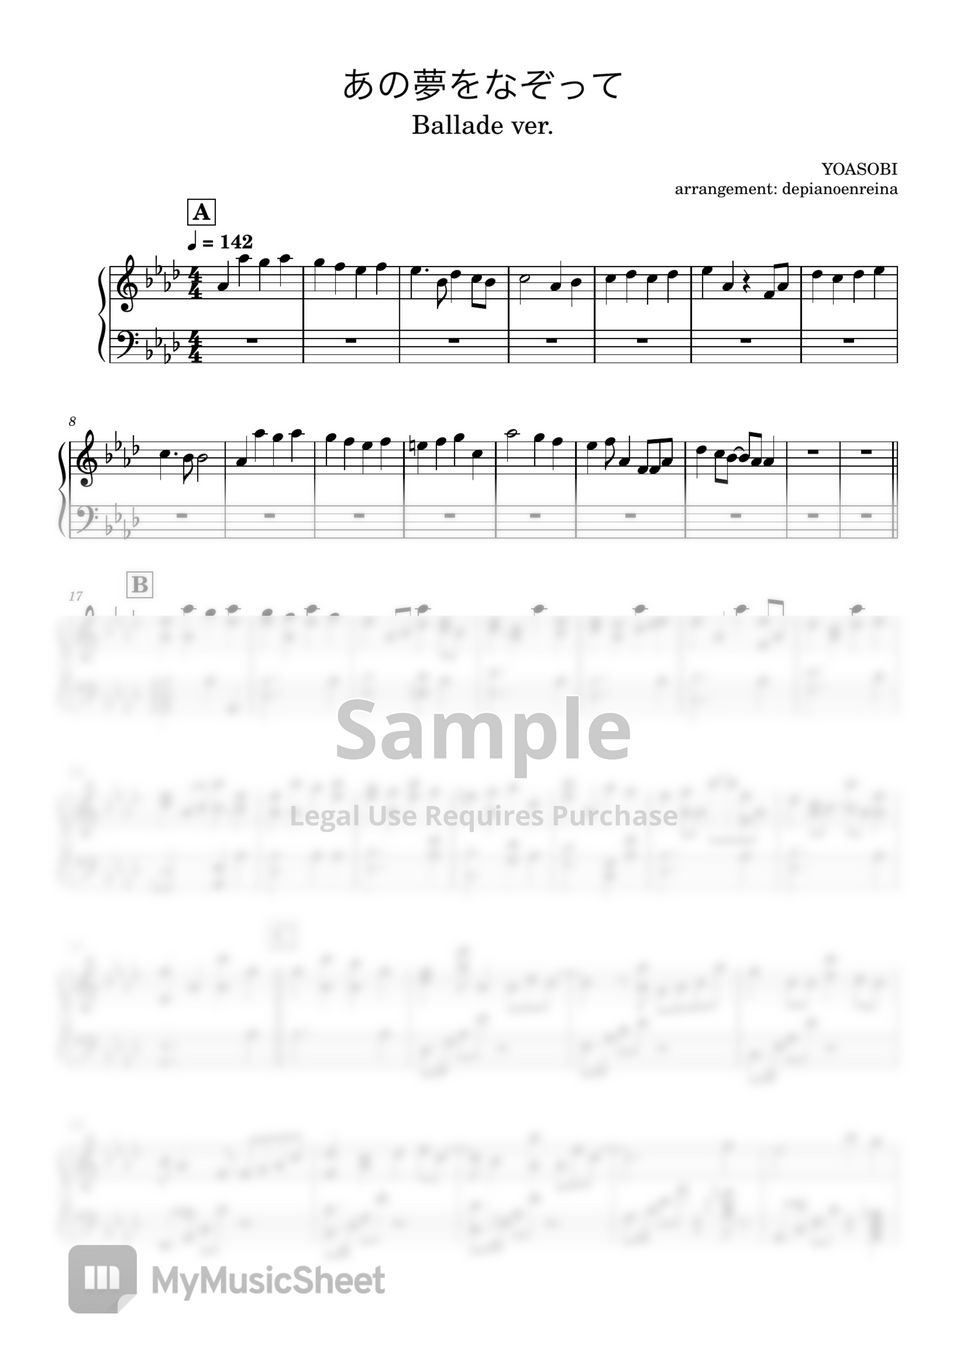 YOASOBI - Tracing That Dream (Ballad ver. Arrangement -- Playable on 49-keys Keyboard (With PDF, MIDI, and WAV File)) by depianoenreina